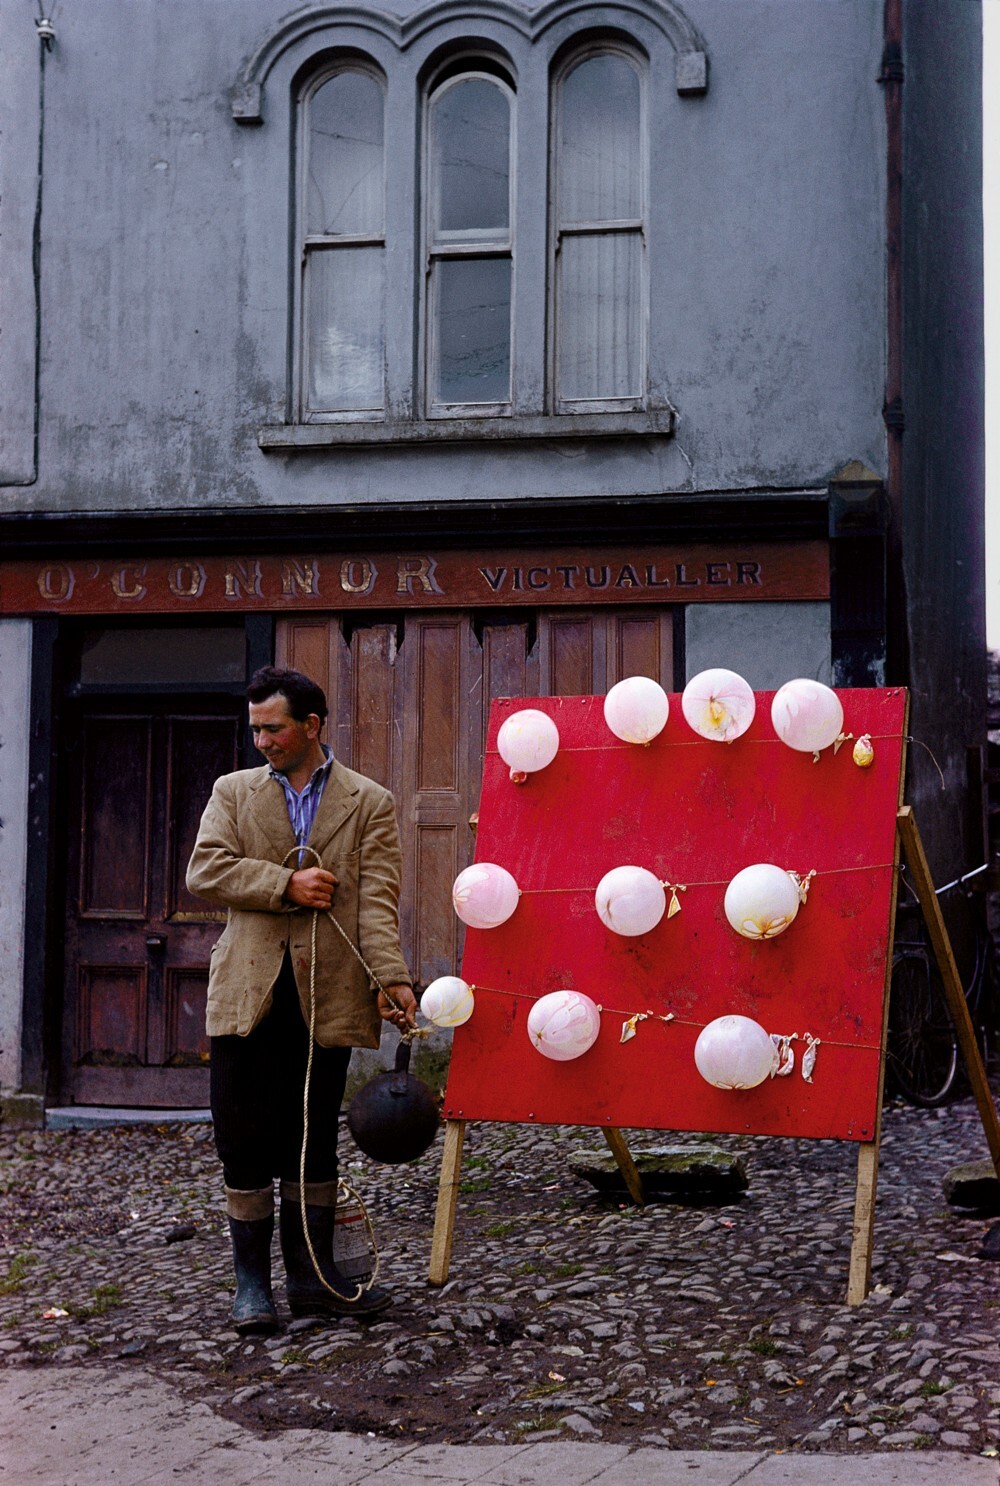 Ярмарка шаров, Ирландия. Киллорглин, графство Керри, 1954 год. Фотограф Инге Морат